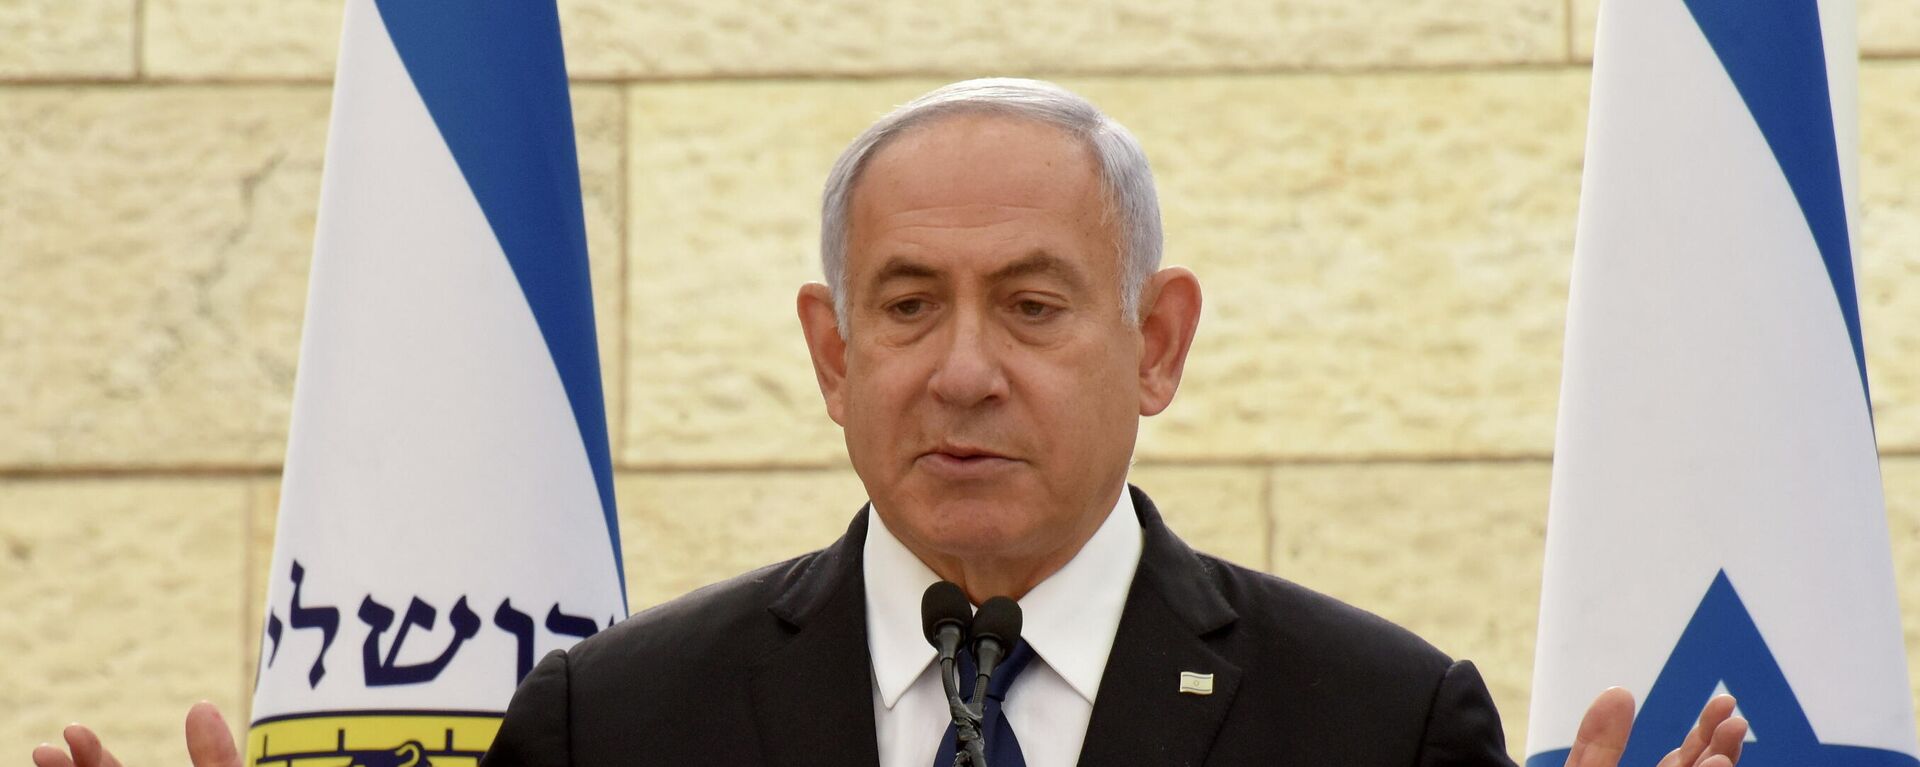 Benjamín Netanyahu, primer ministro israelí - Sputnik Mundo, 1920, 02.05.2021